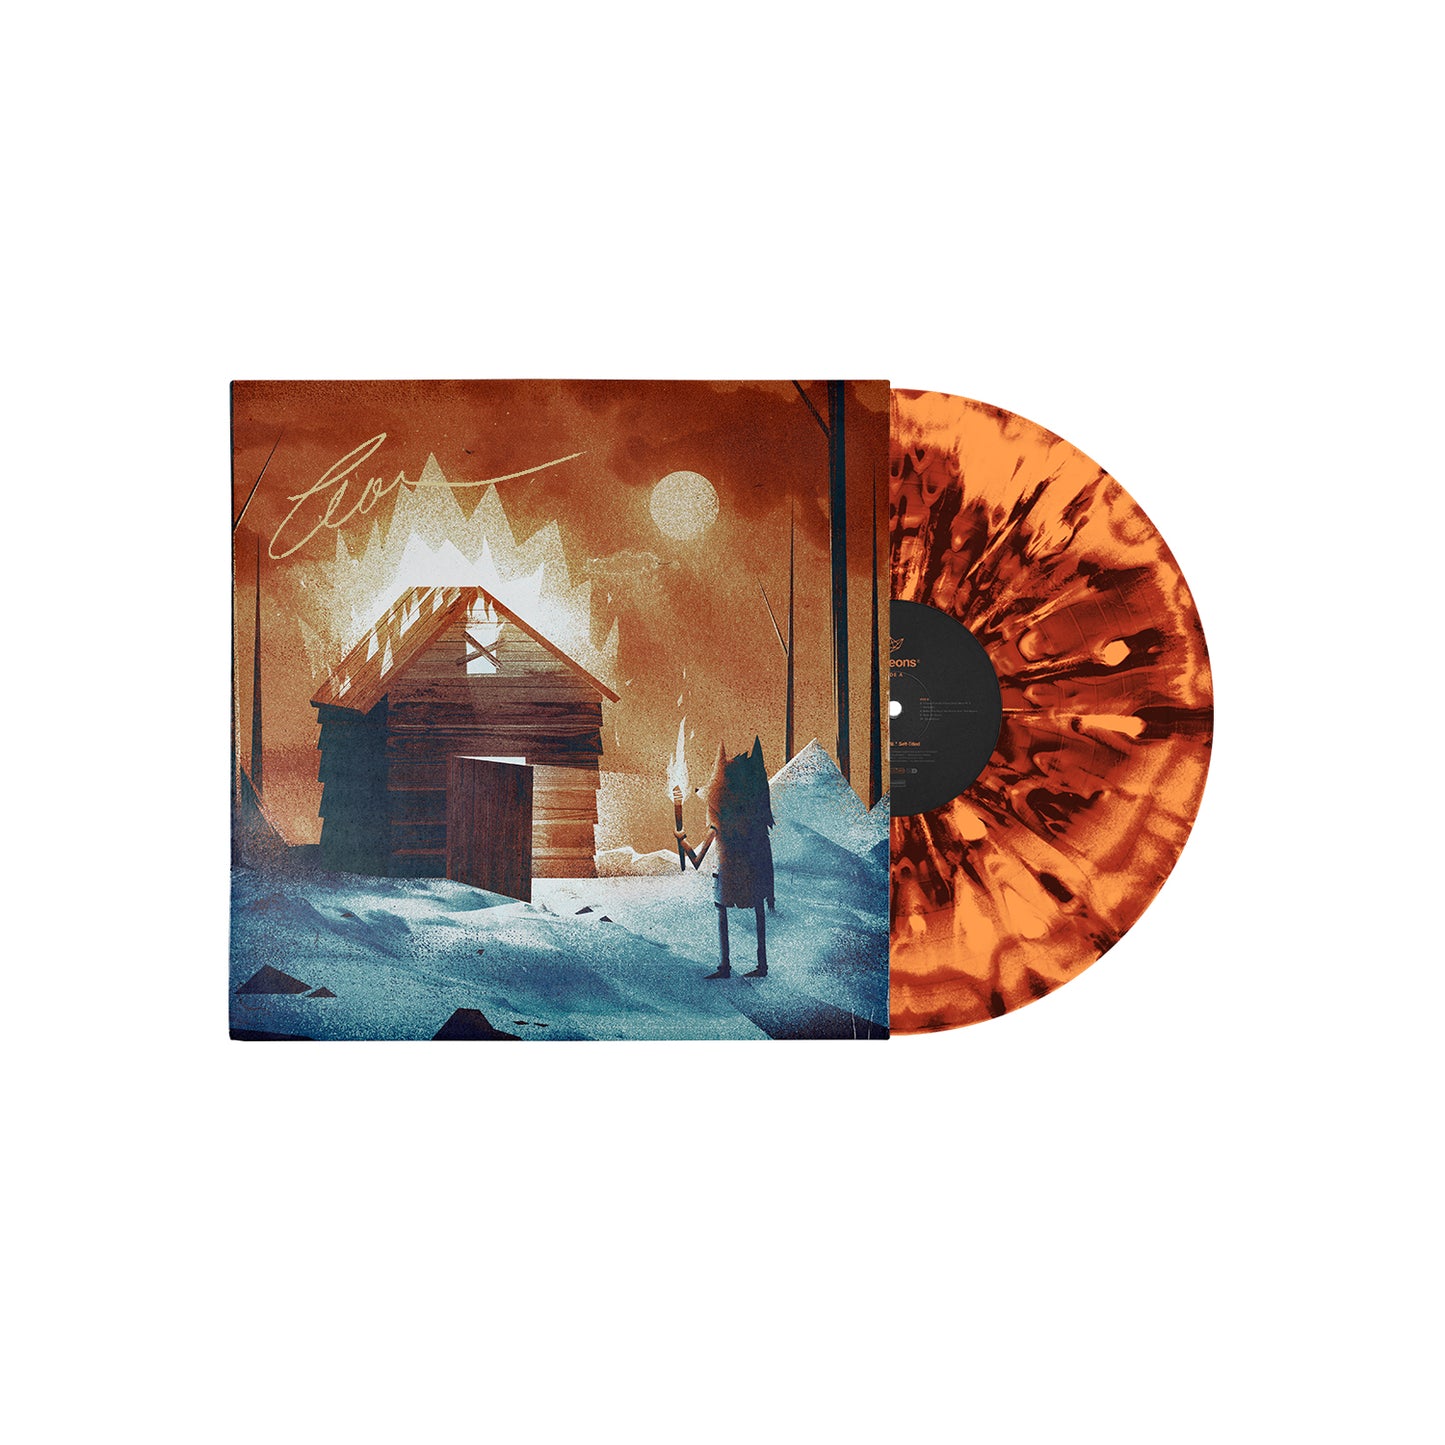 Galleons - Self-Titled Signed Vinyl - Halloween Orange (Used condition)